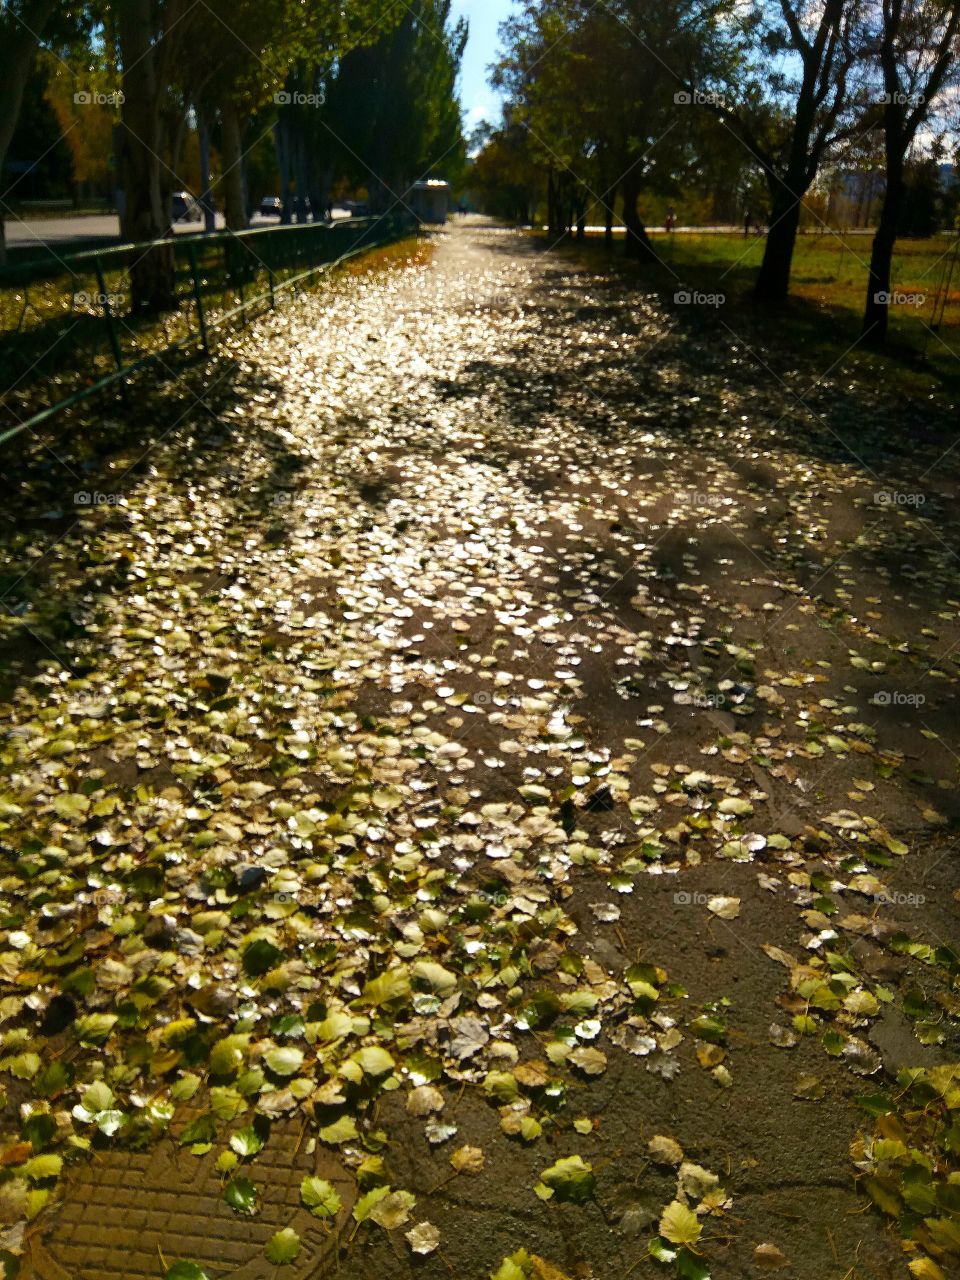 Golden autumn road